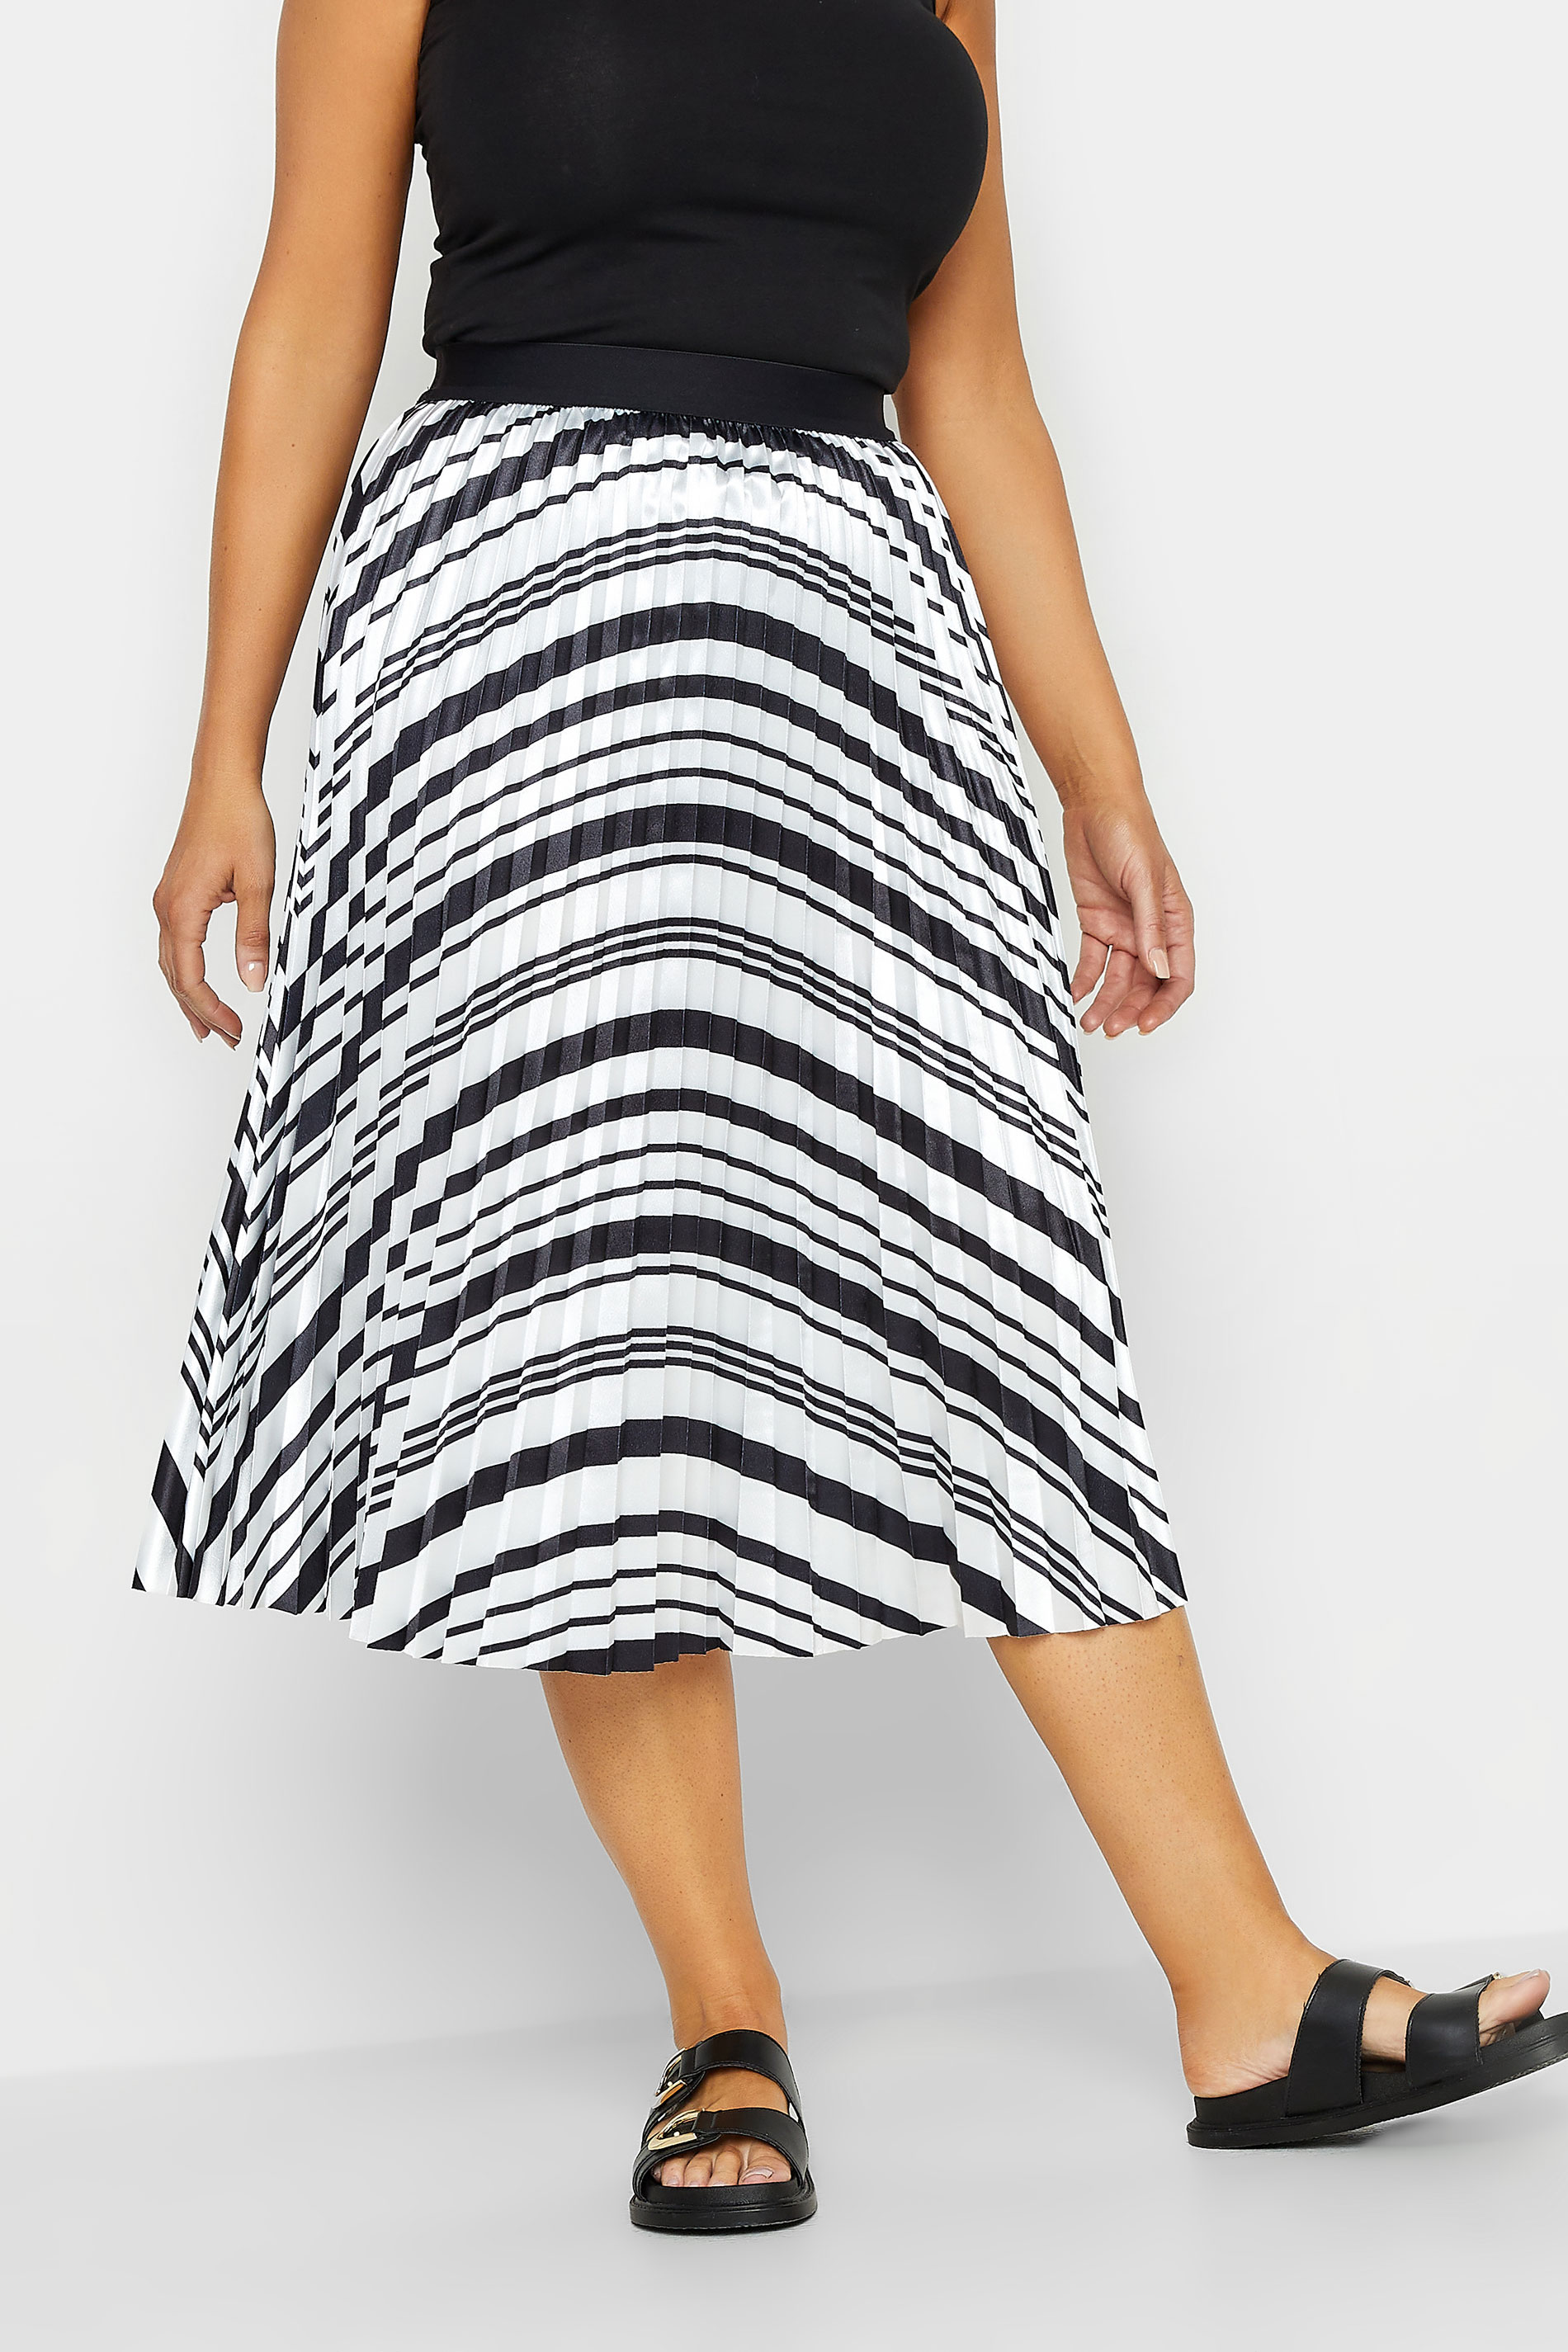 M&Co Black Stripe Print Pleated Midi Skirt | M&Co 1